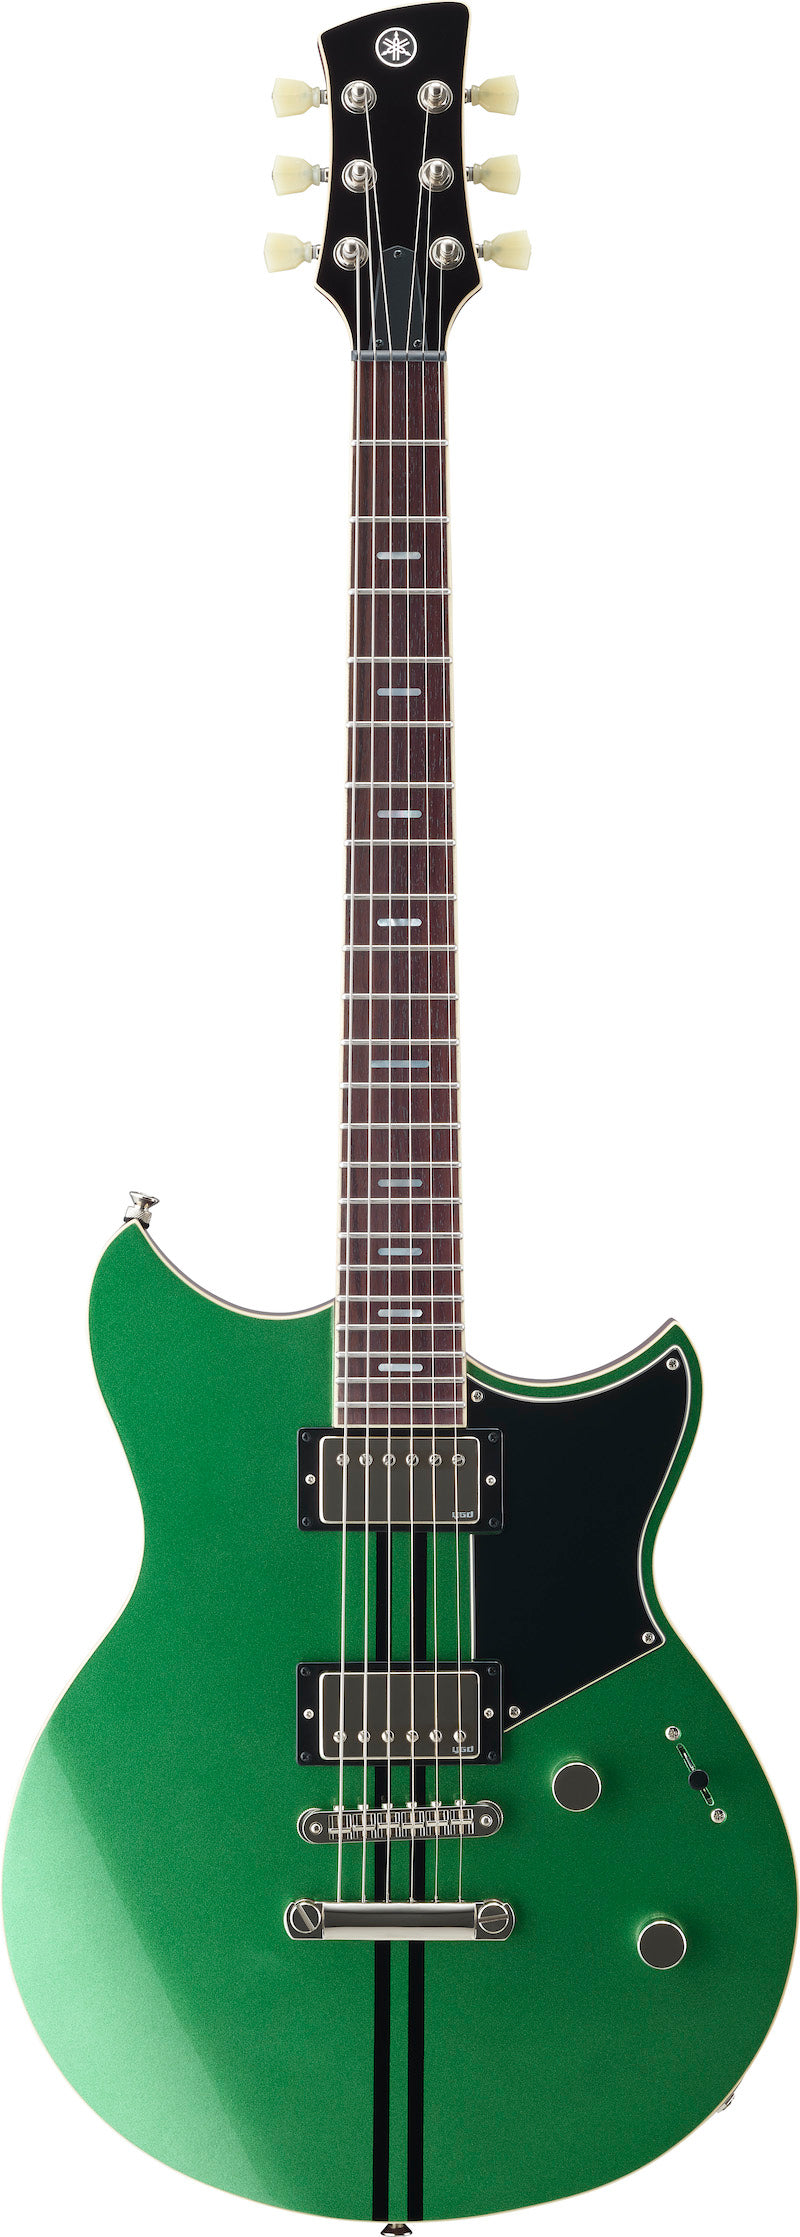 Yamaha Revstar RSS20 FLG Electric Guitar - Flash Green - A Pratte